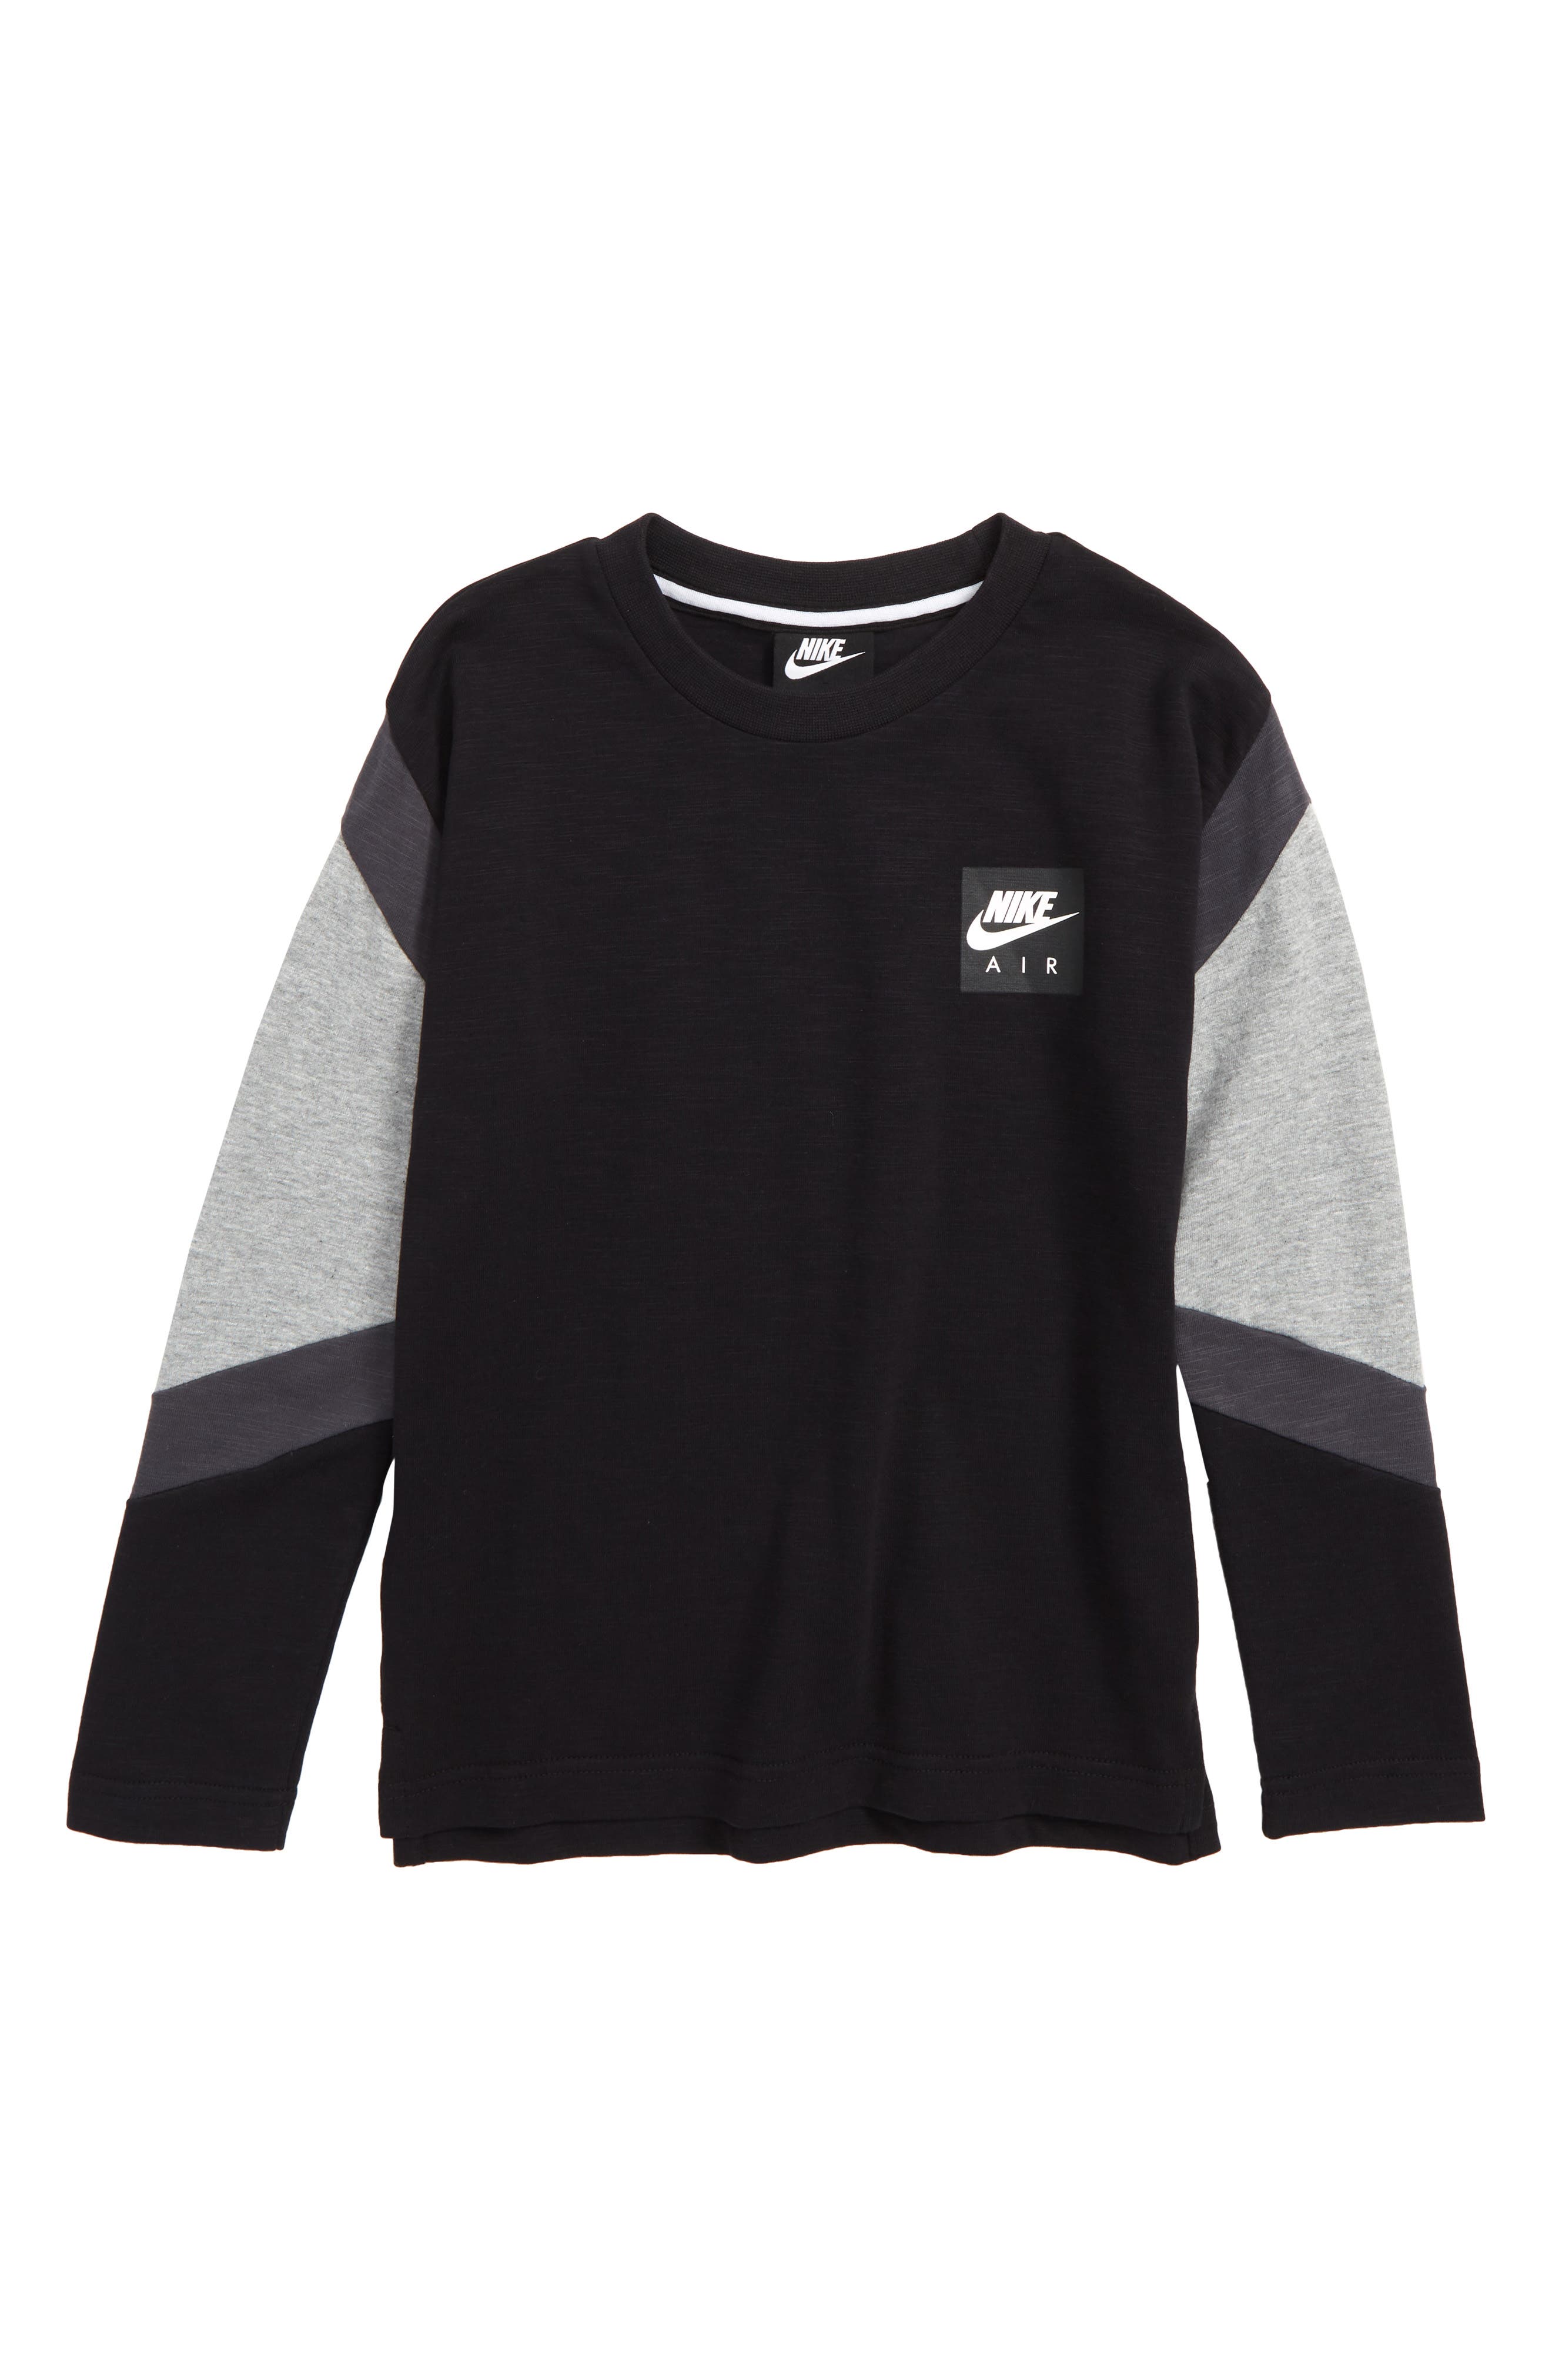 Nike Air Long Sleeve T-Shirt (Little 